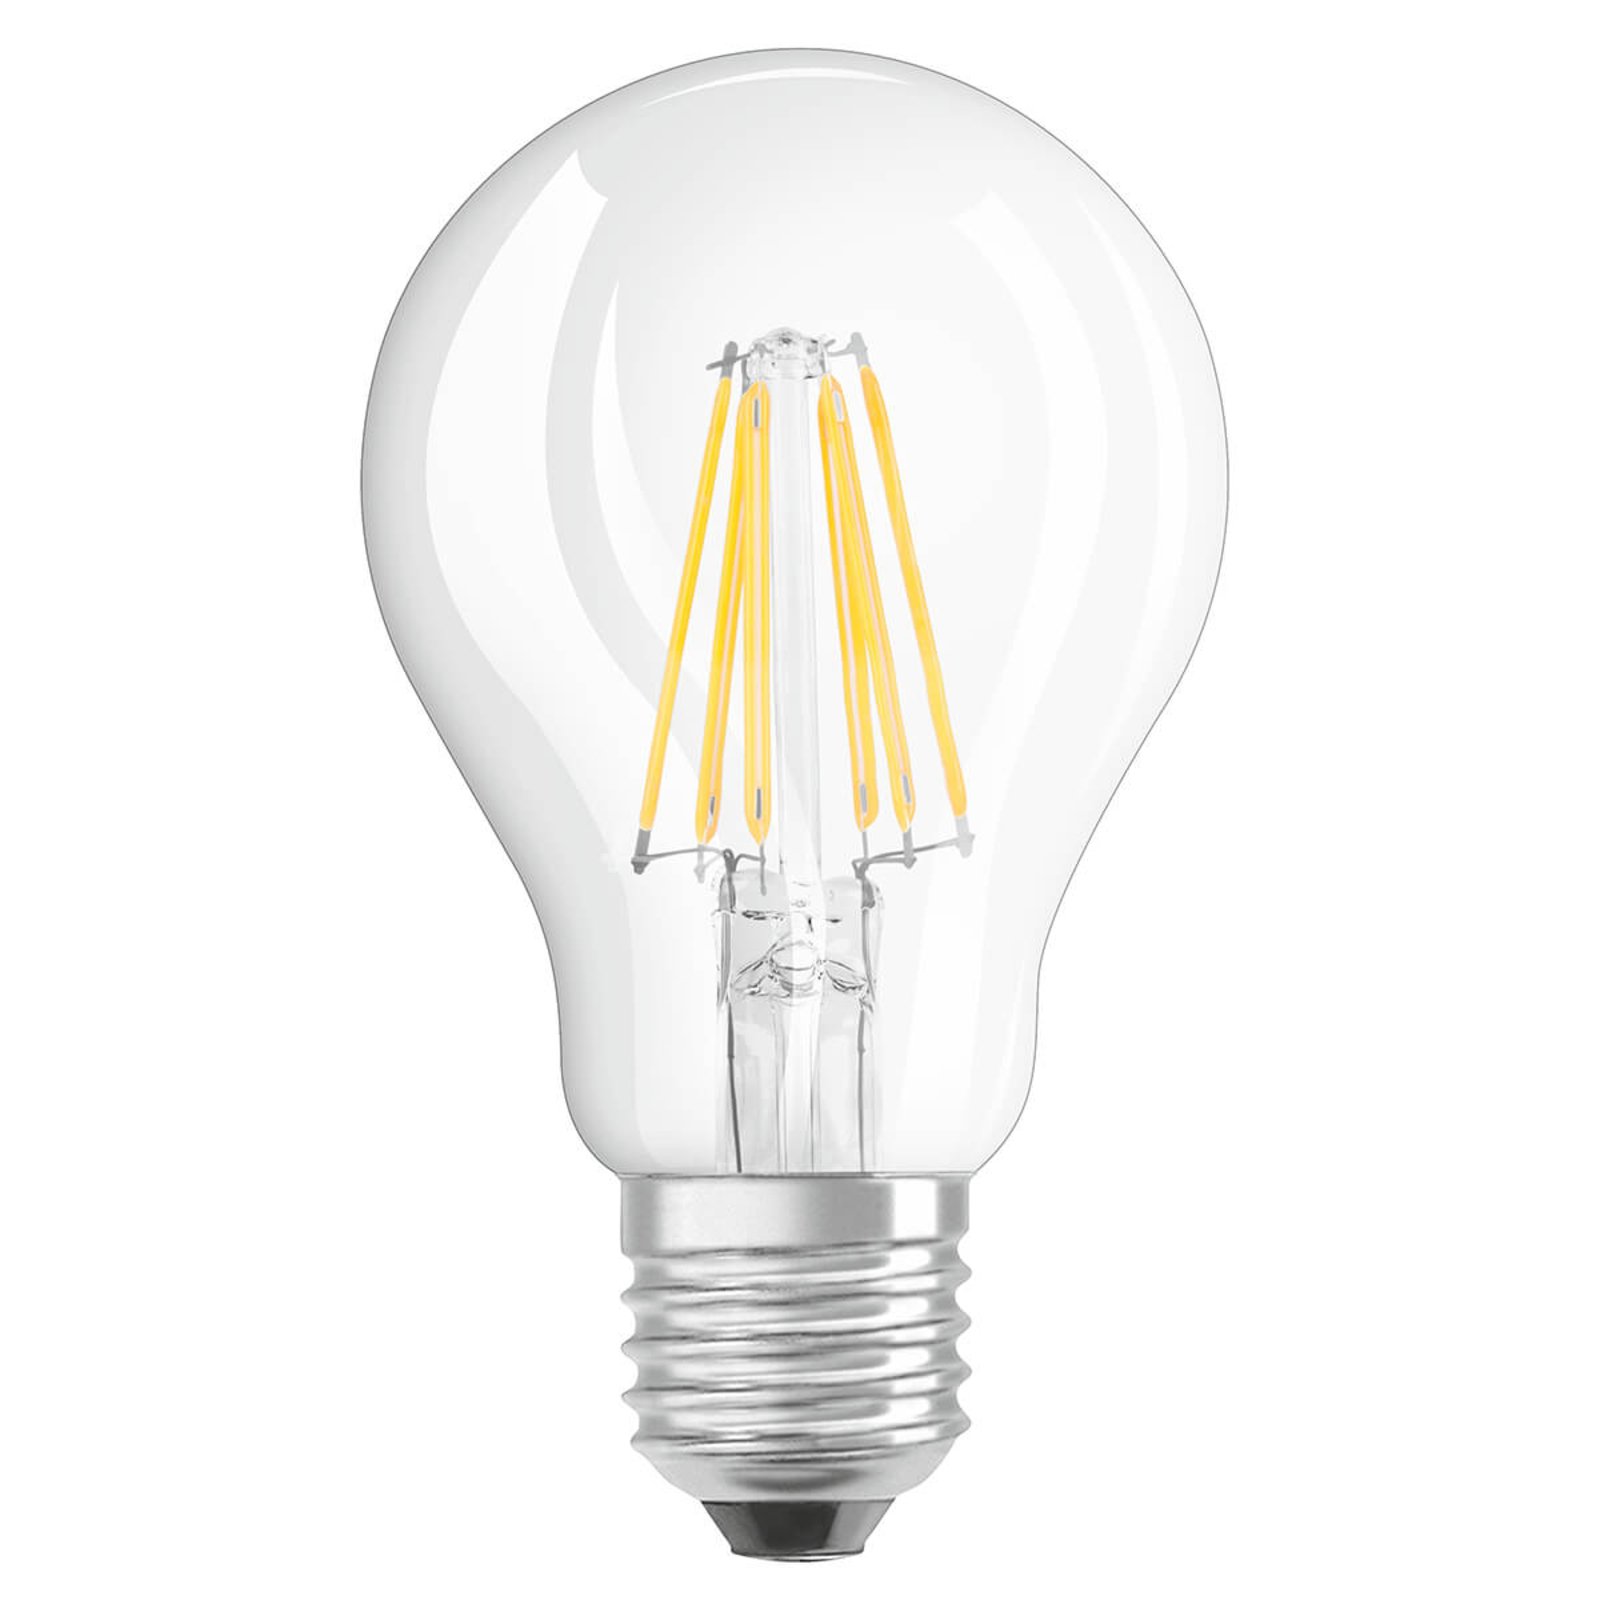 OSRAM LED-lampa E27 7W varmvit GLOWdim klar